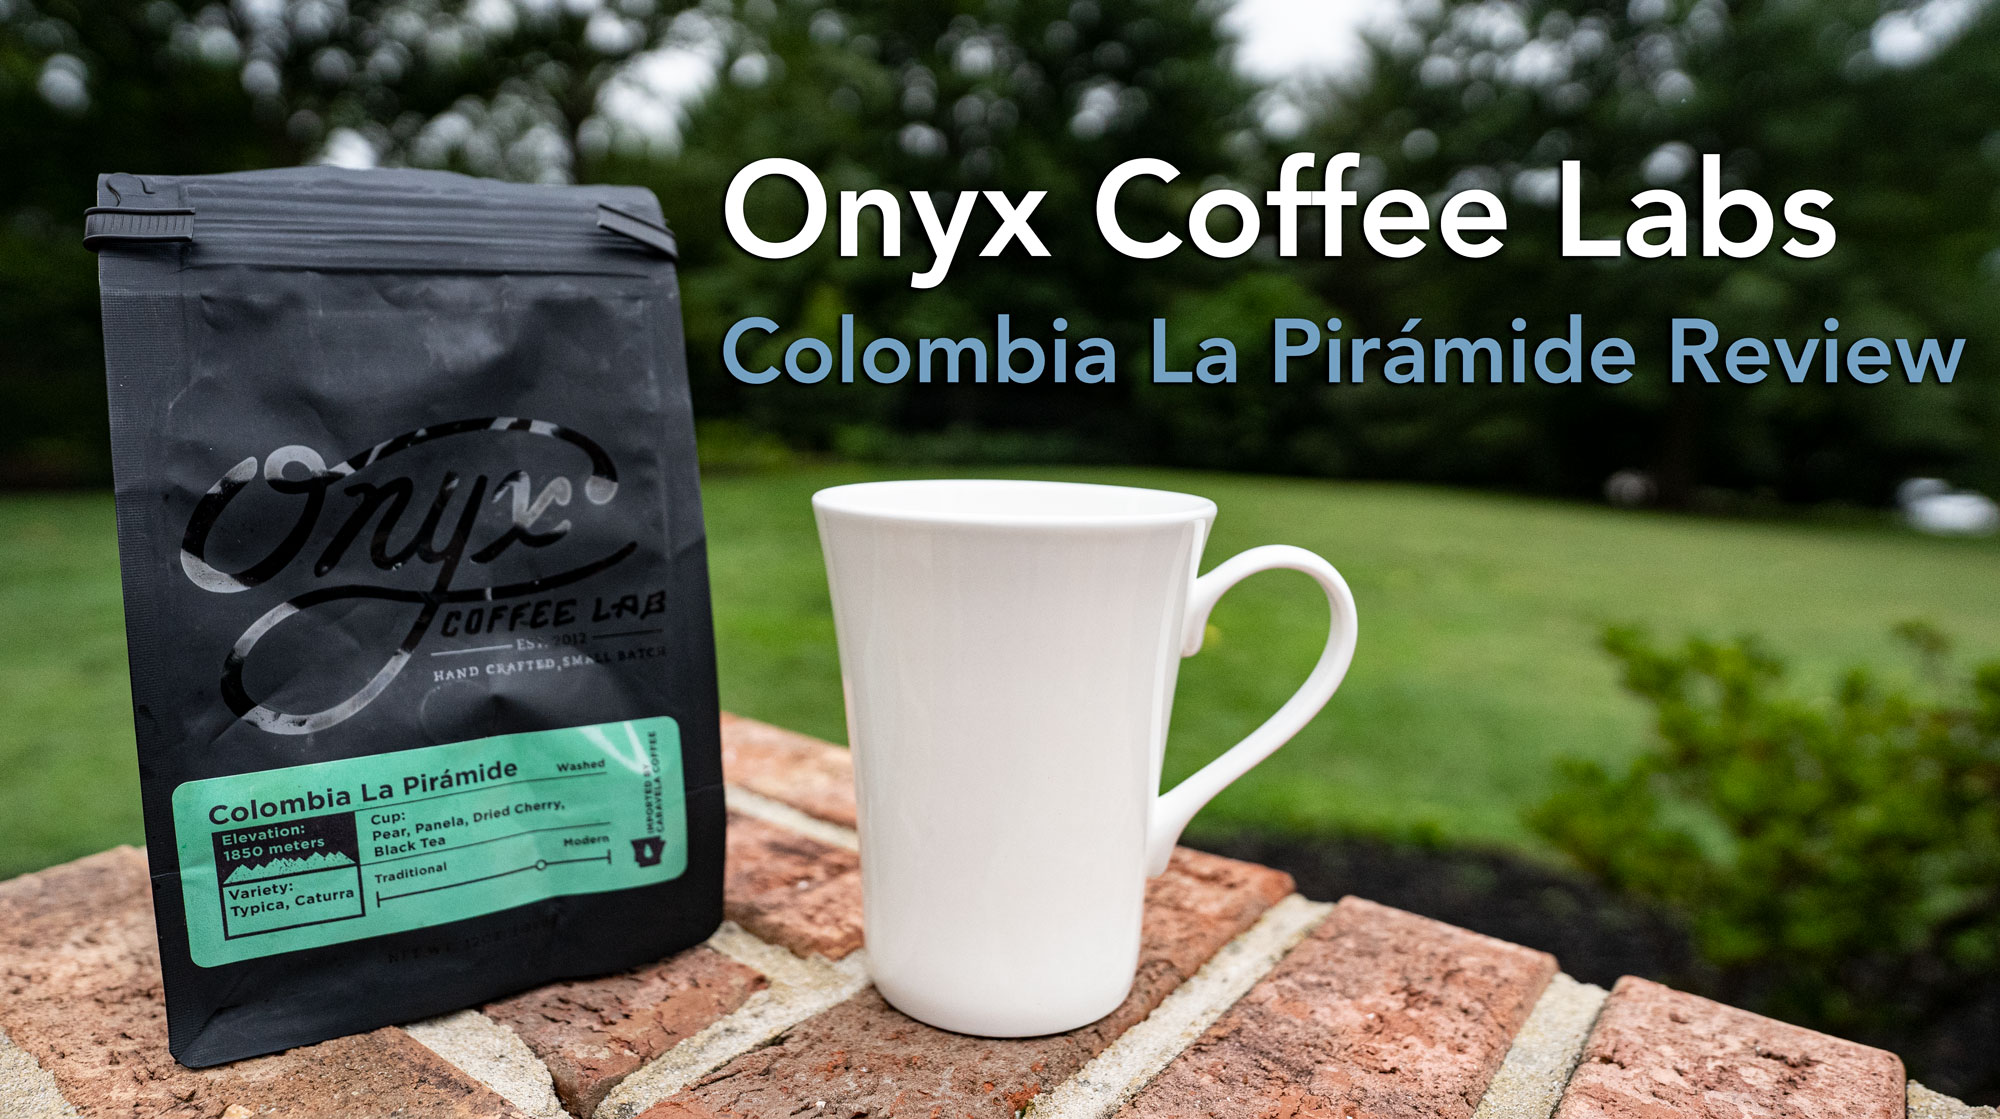 Onyx Colombia La Piramide coffee bag and mug used for a review